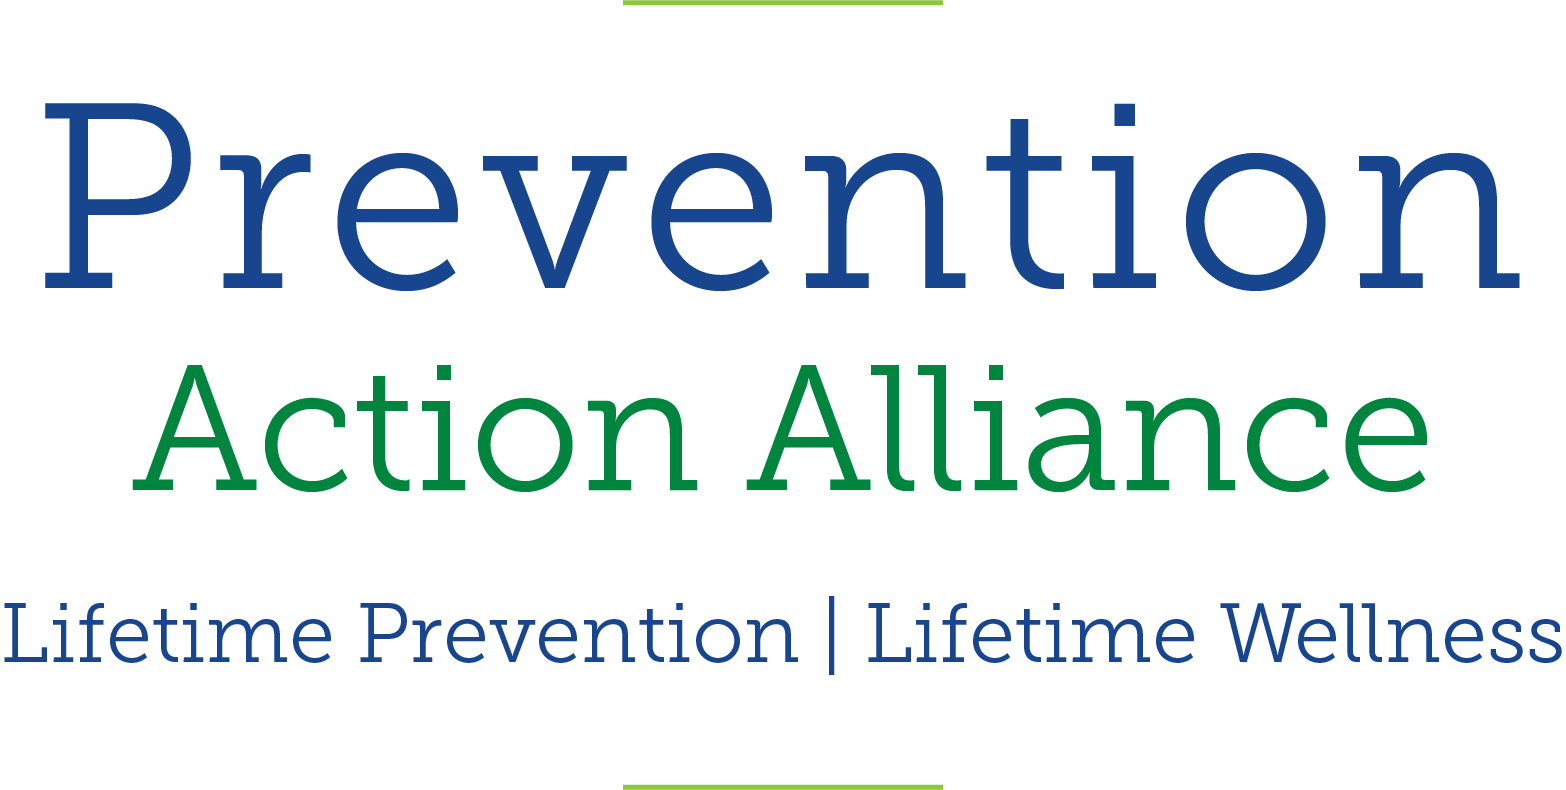 Prevention Action Alliance